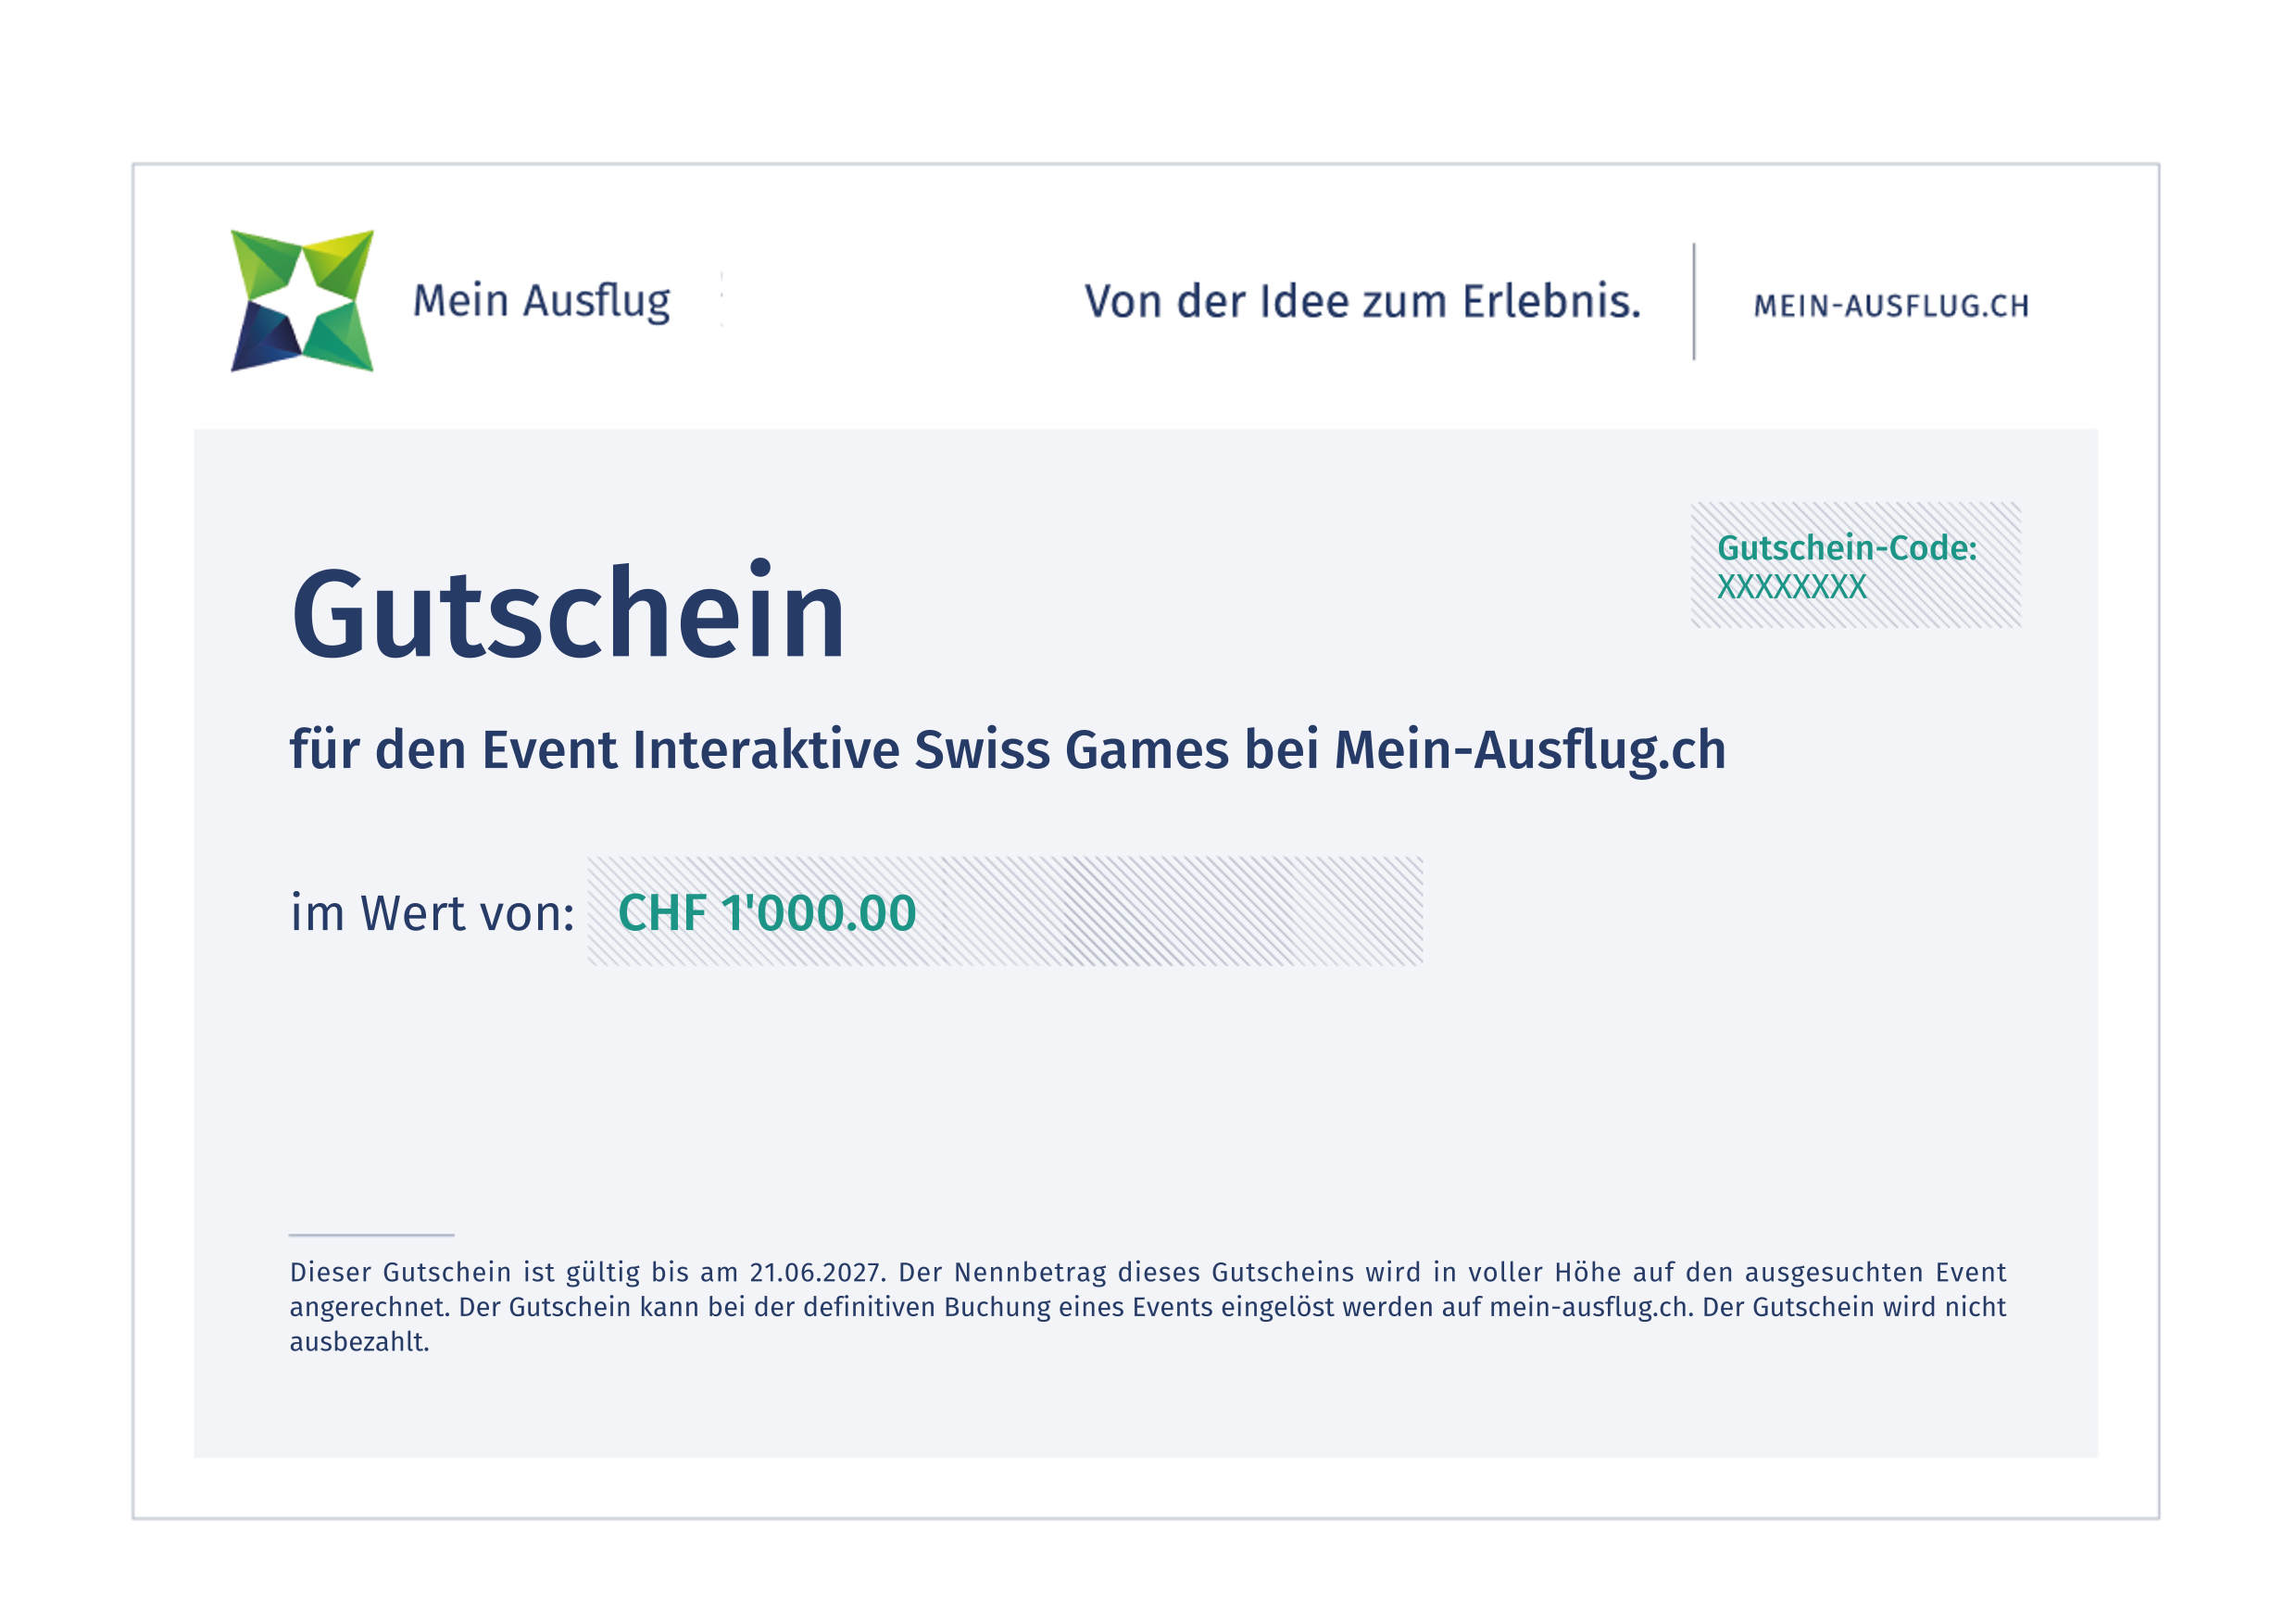 Interaktive Swiss Games